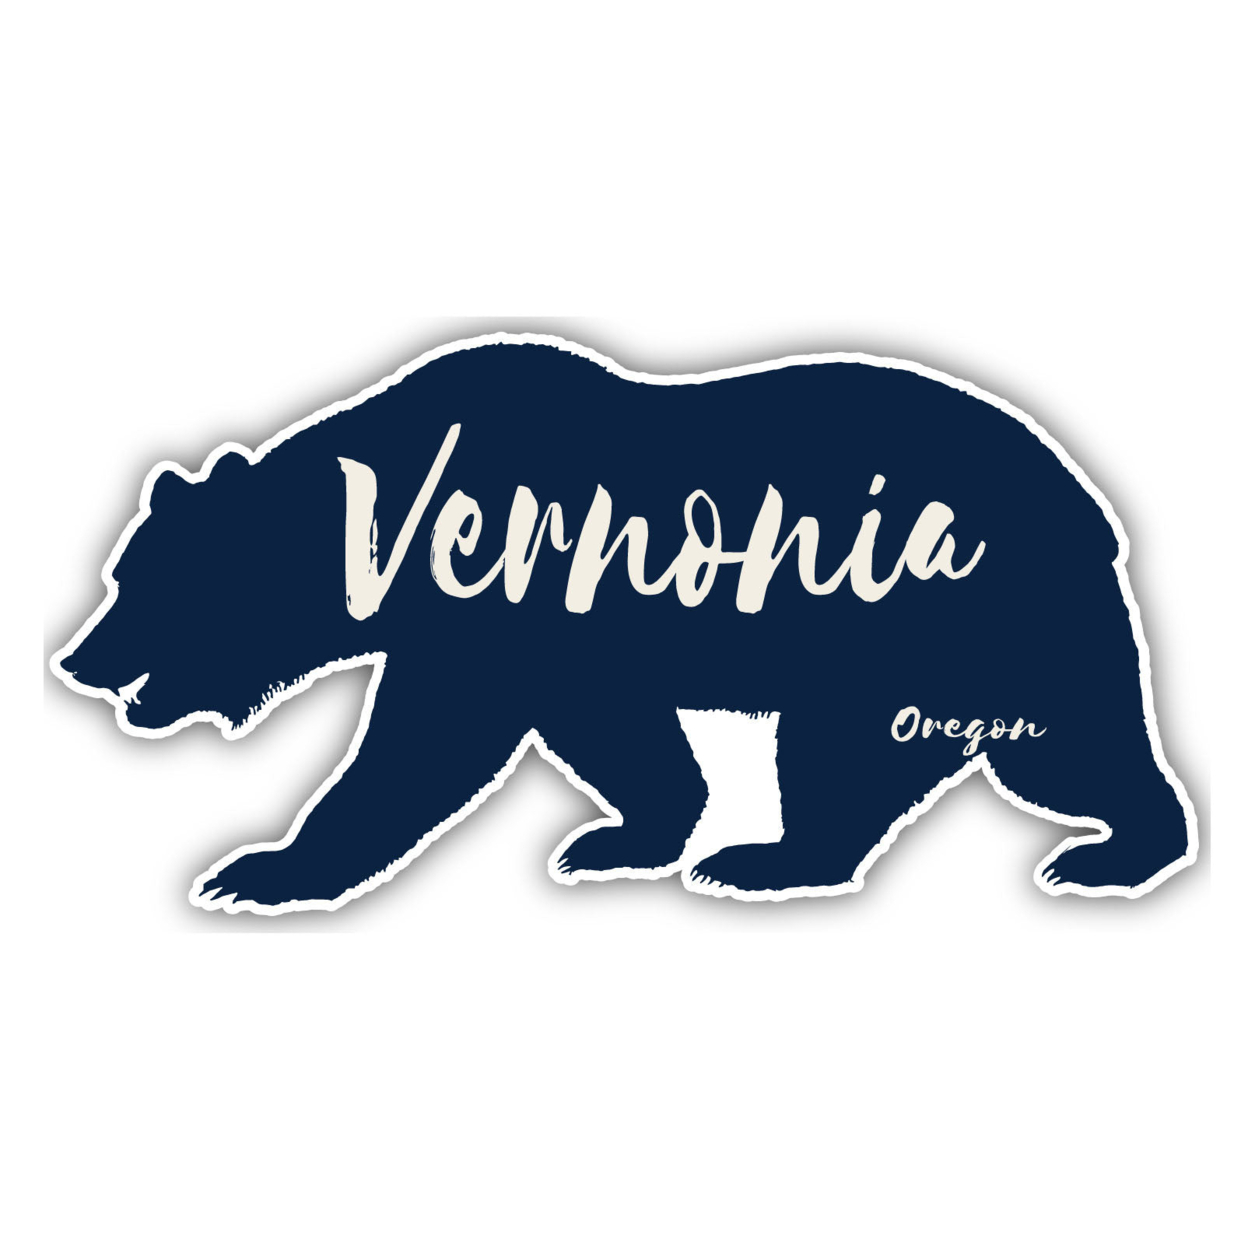 Vernonia Oregon Souvenir Decorative Stickers (Choose Theme And Size) - Single Unit, 4-Inch, Great Outdoors